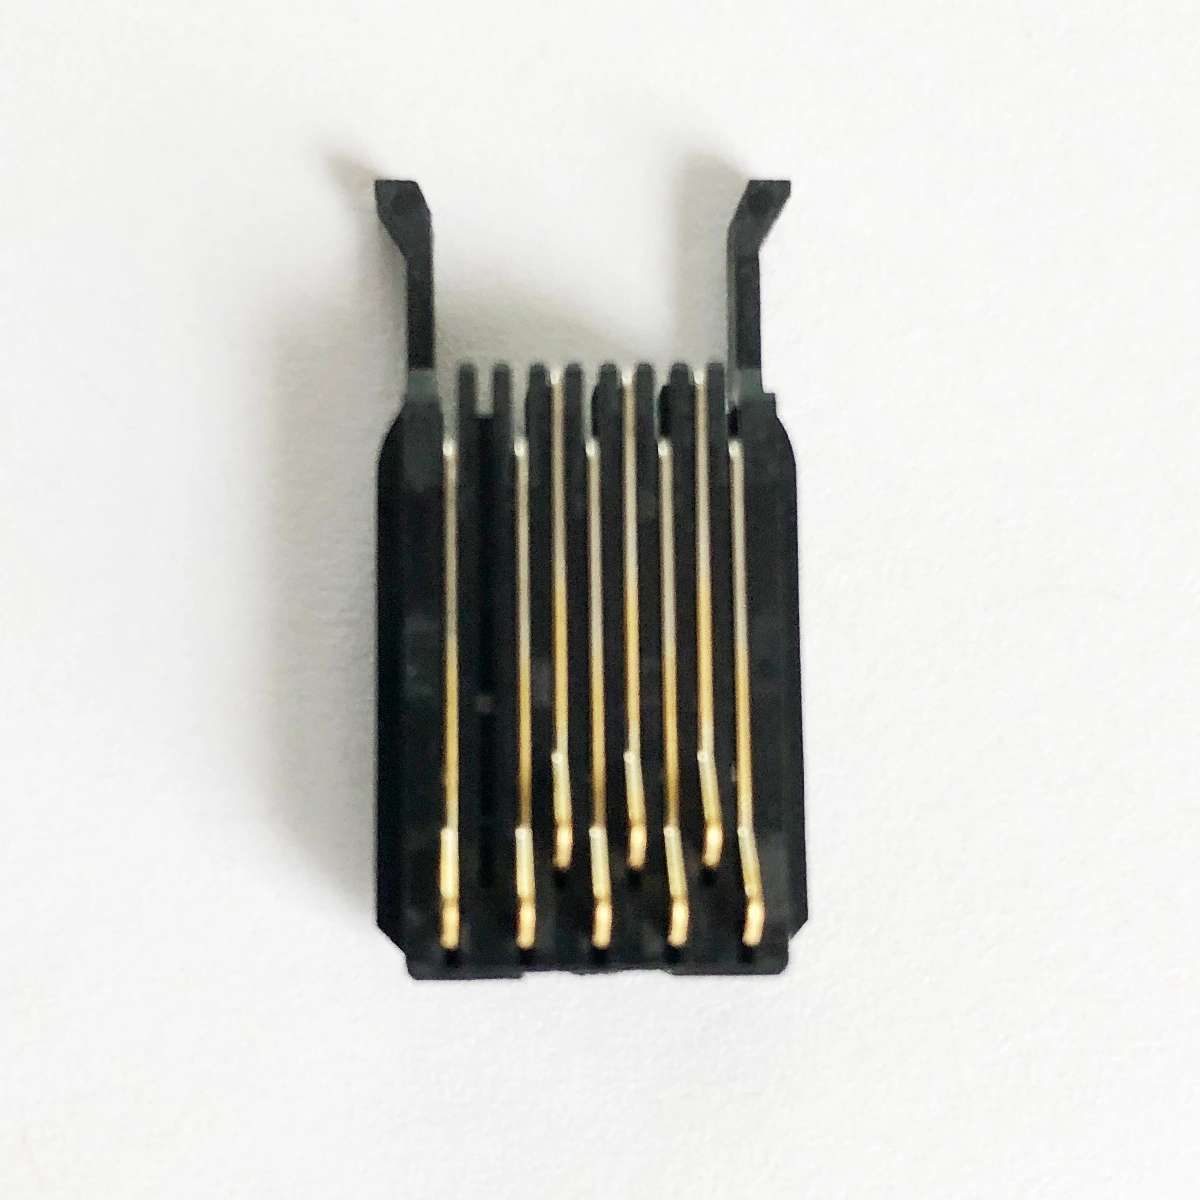 epson artisan 1430 stylus photo 1400 ink cartridge detection chip board